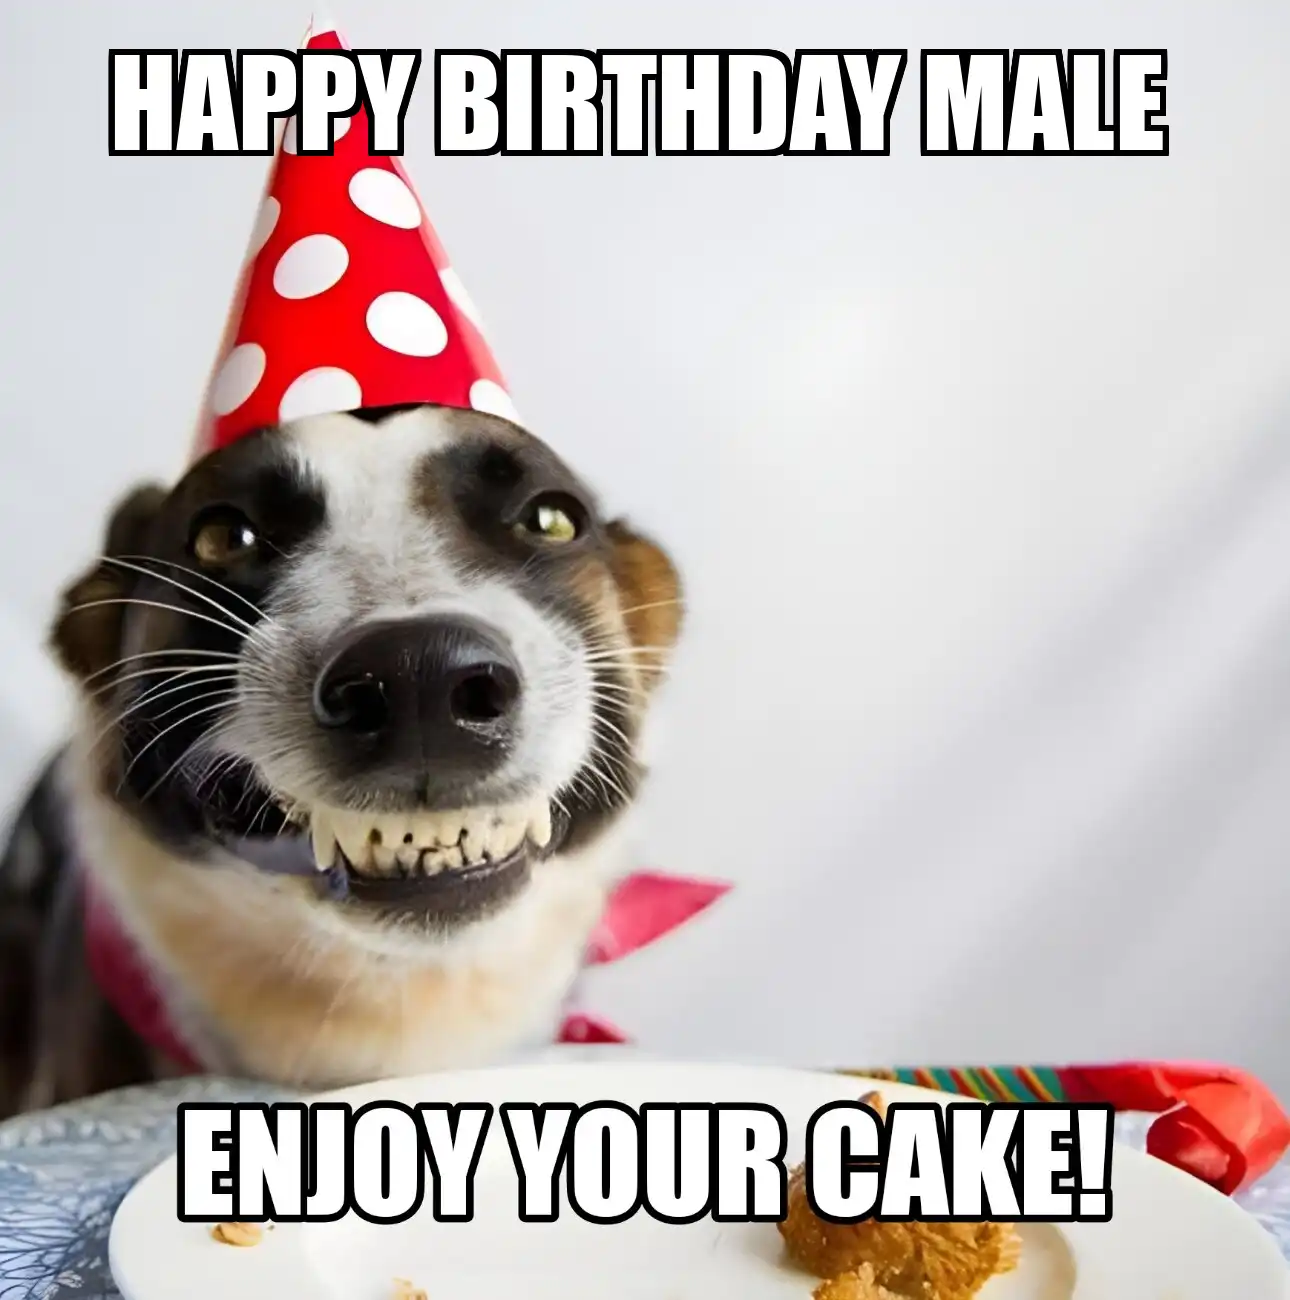 Happy Birthday Male Enjoy Your Cake Dog Meme